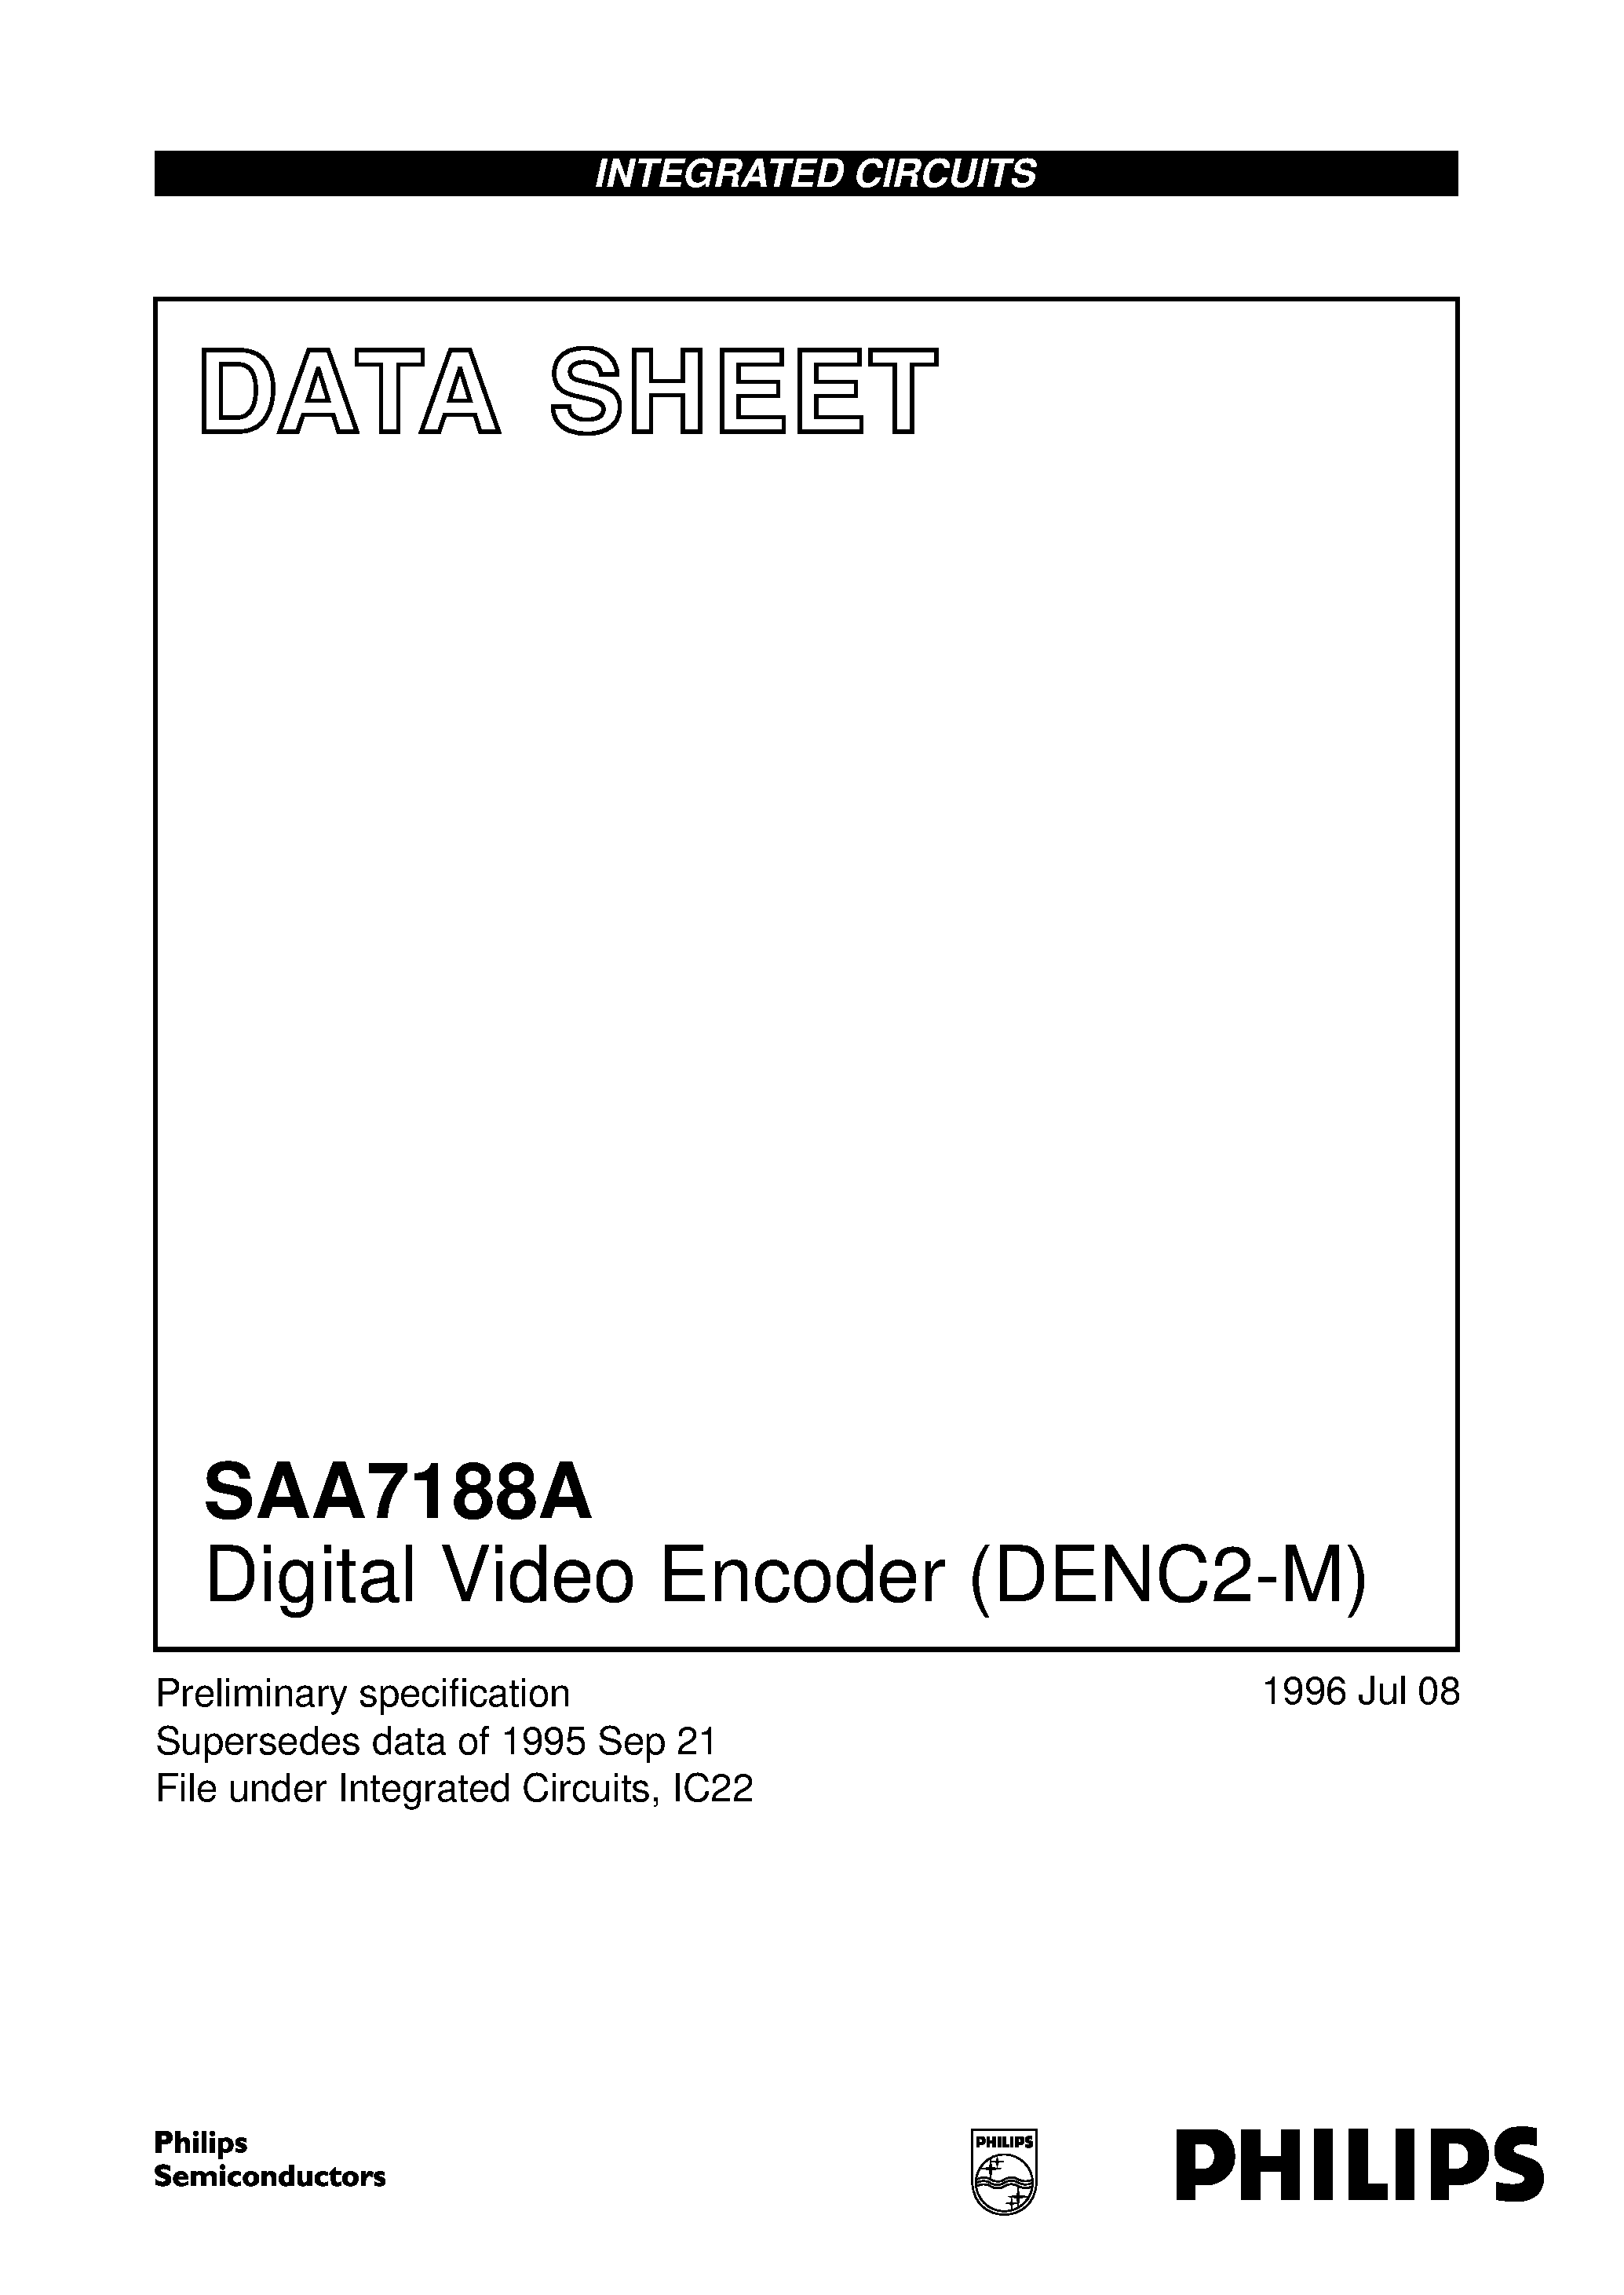 Даташит SAA7188A - Digital Video Encoder DENC2-M страница 1